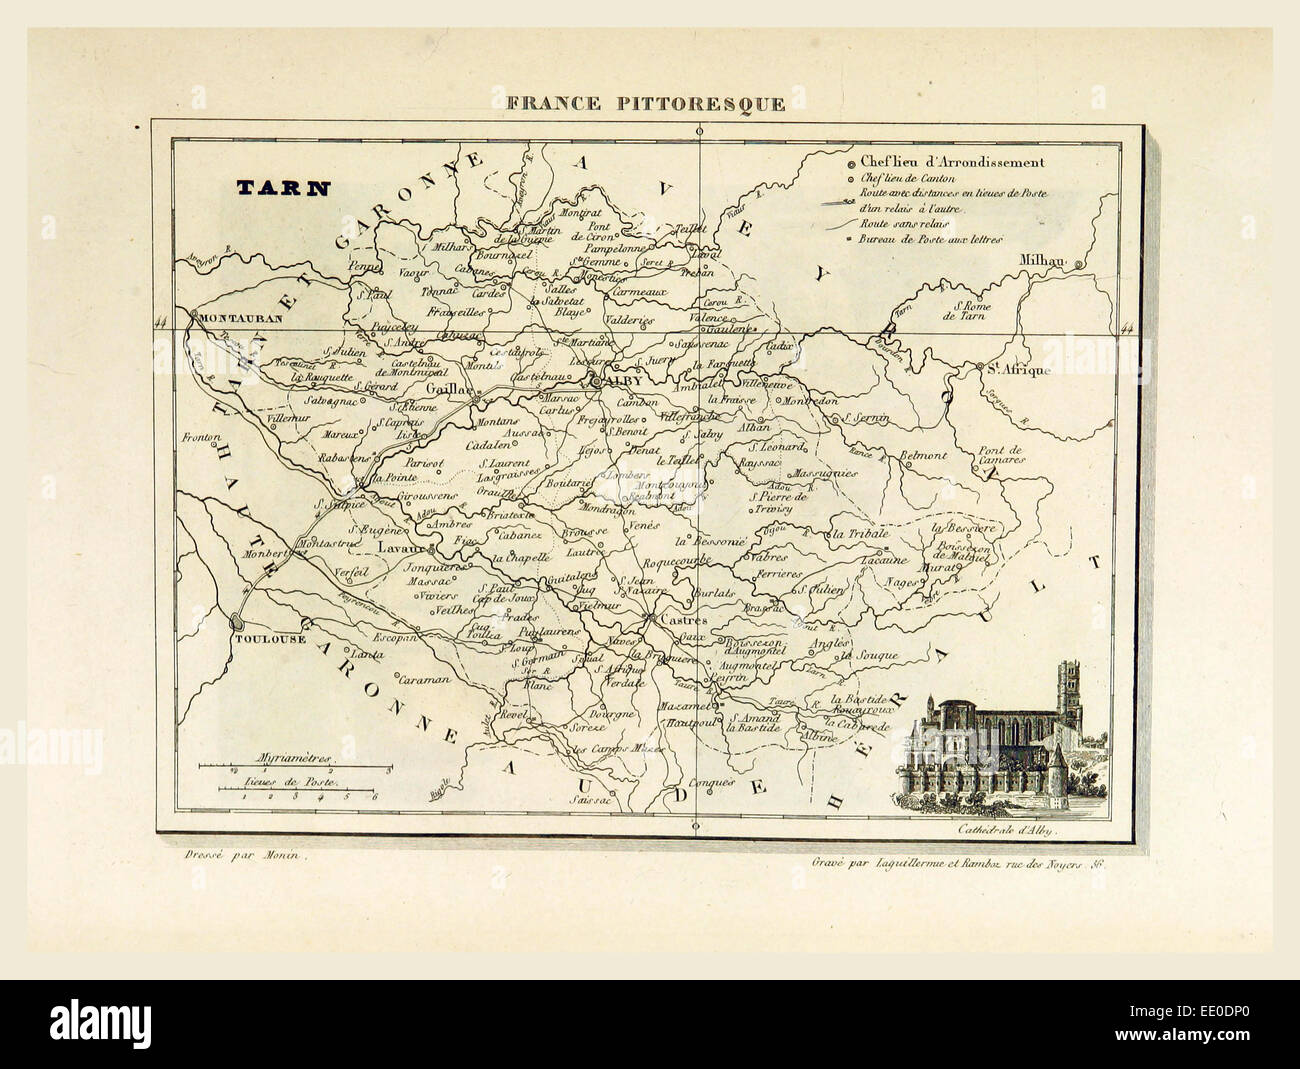 Map Tarn, France pittoresque, 19th century Stock Photo